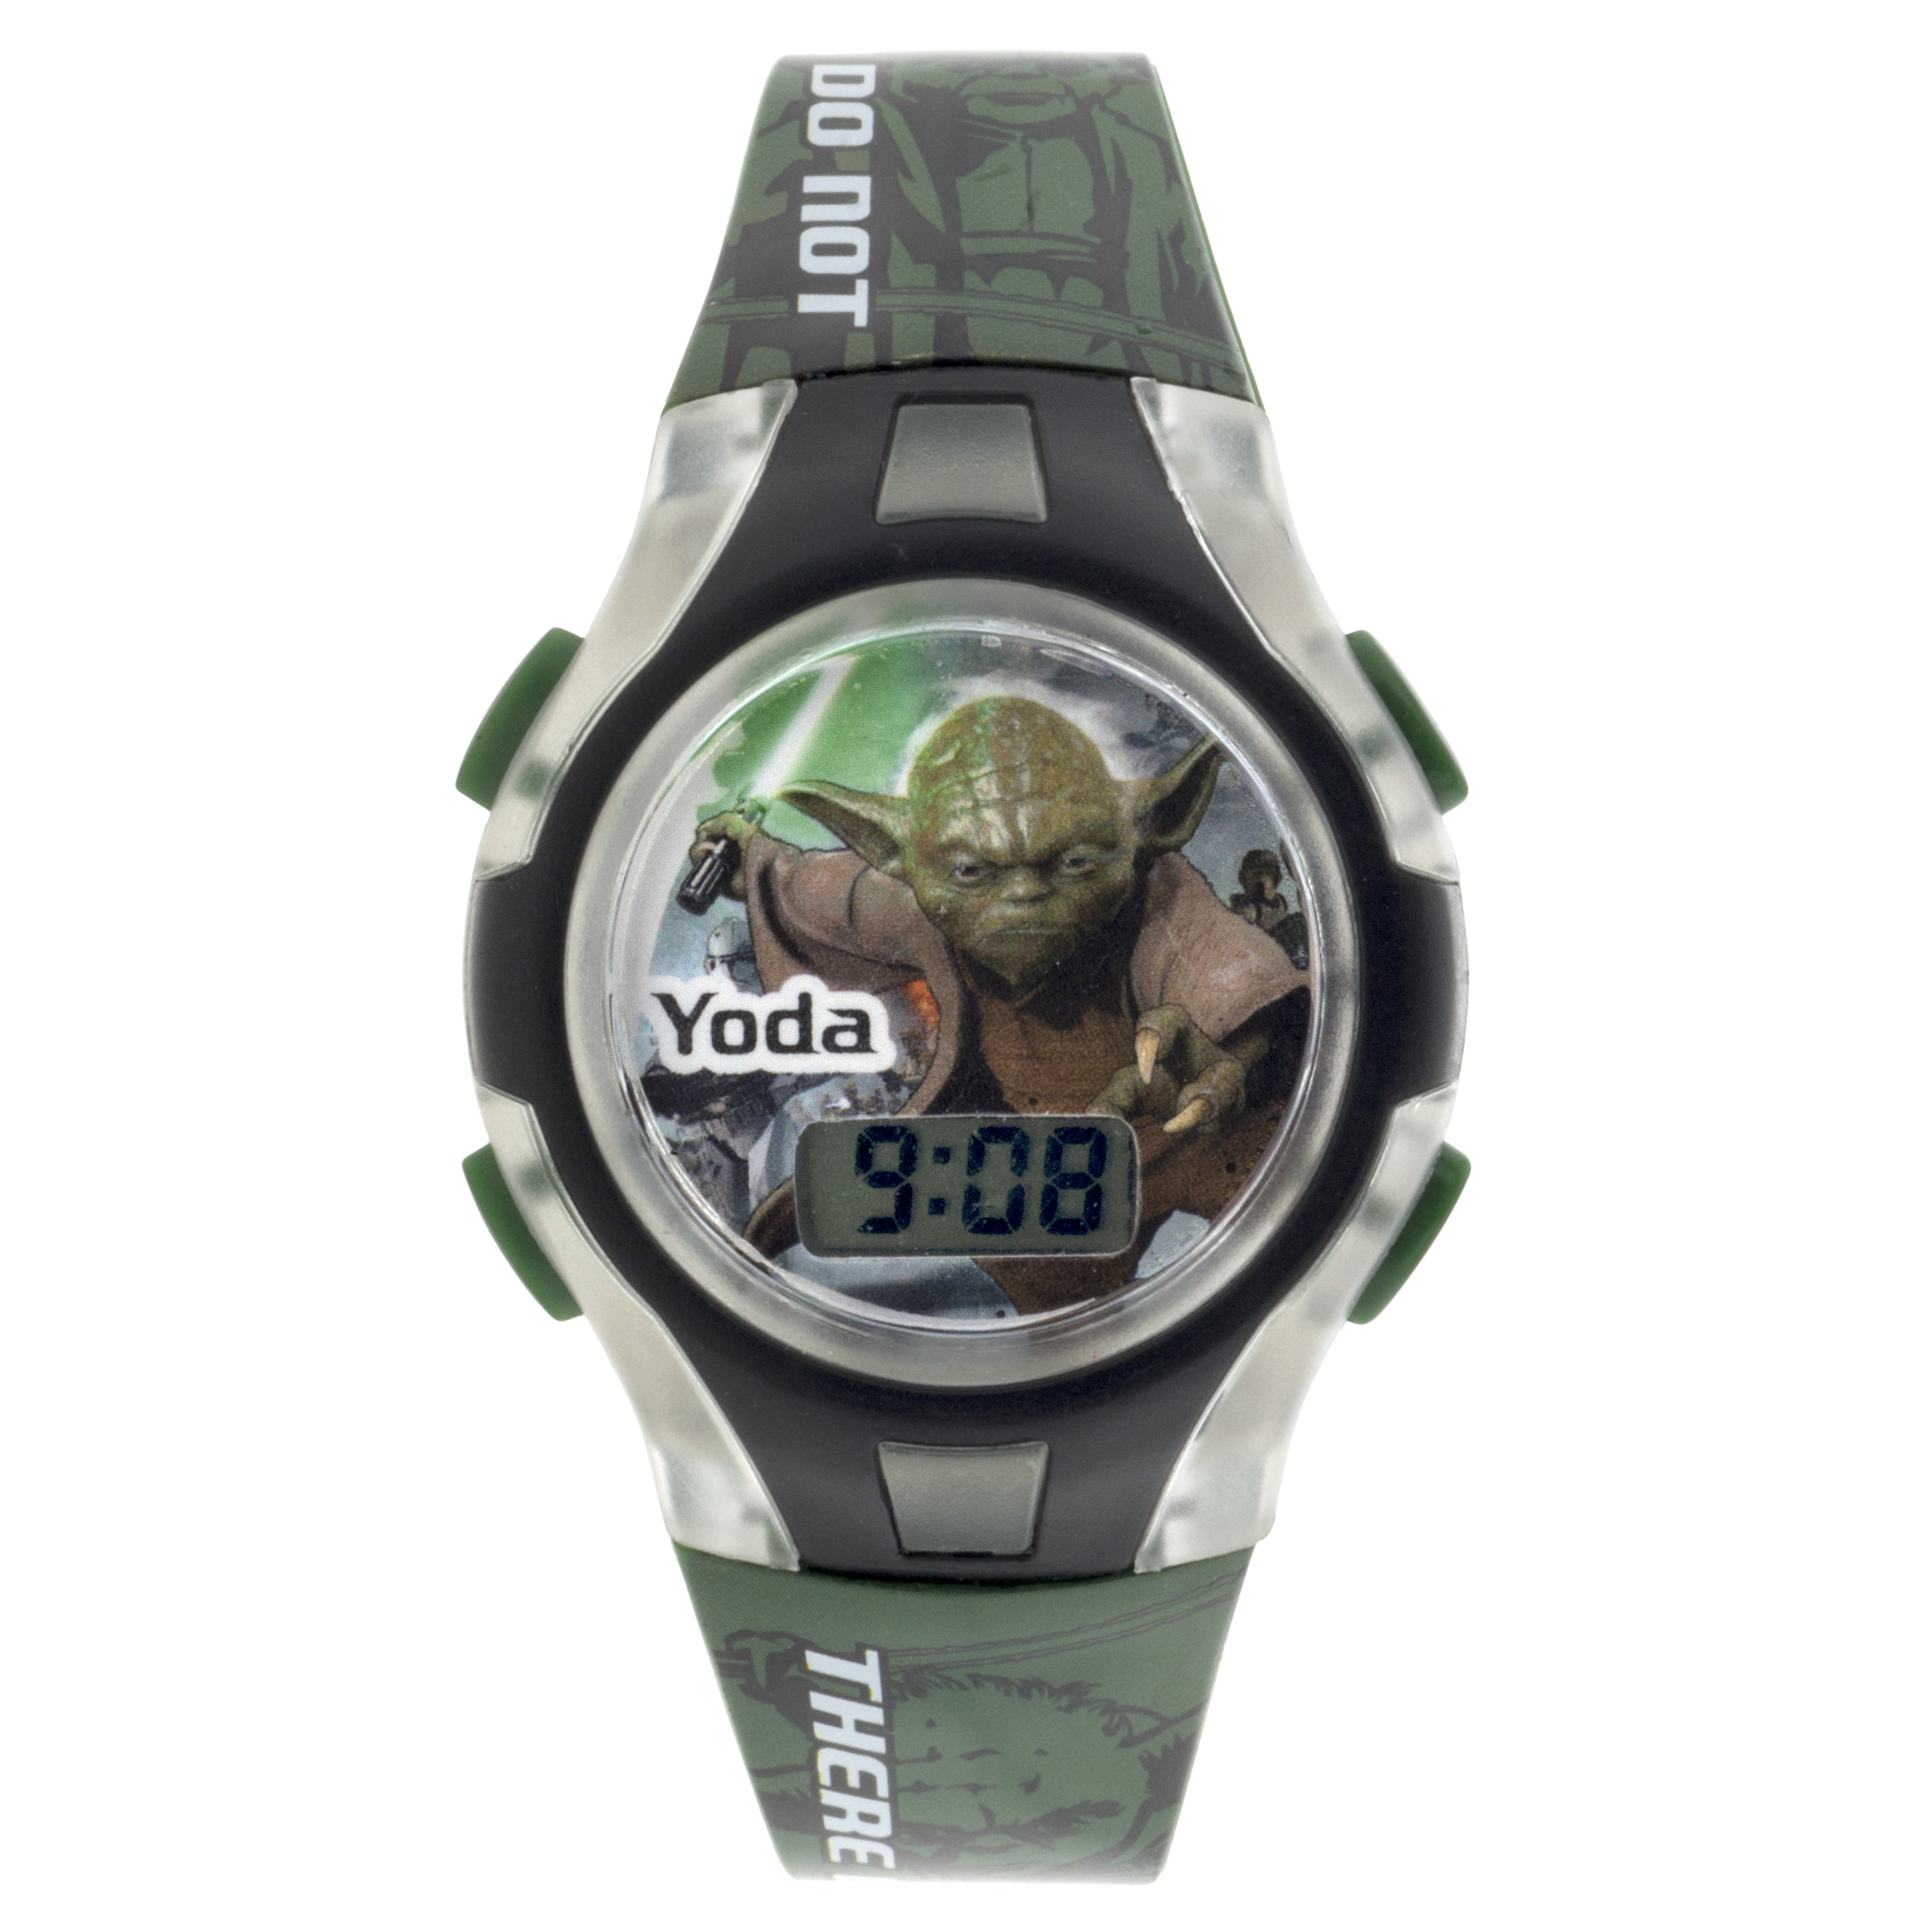 Star Wars Yoda Flashing Lights LCD Watch Only $4.99!